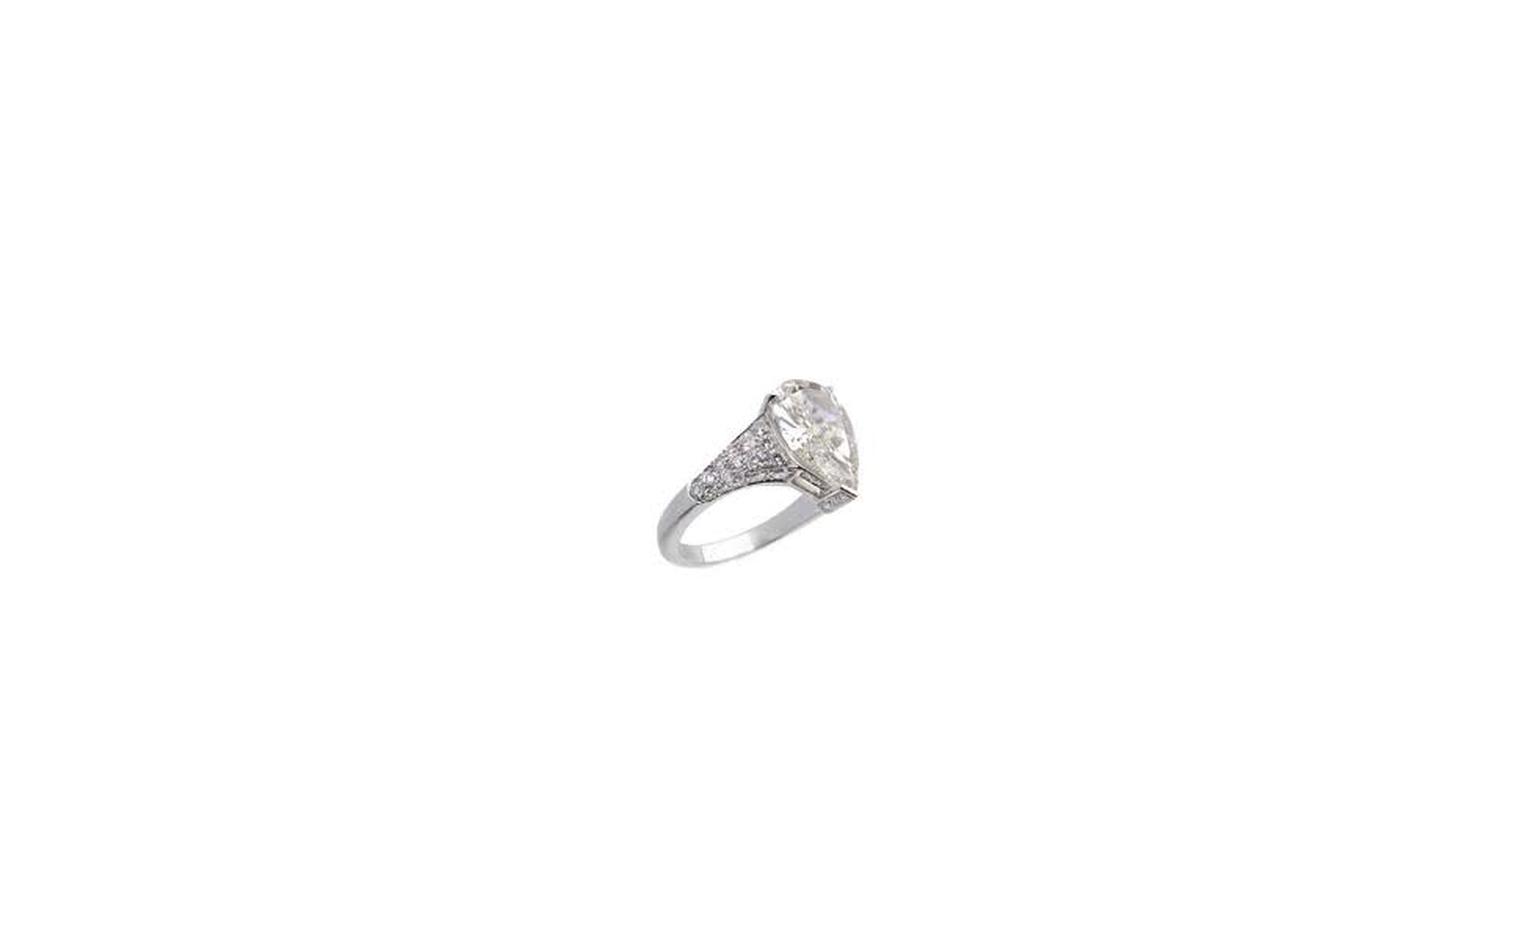 Charlene Wittstock's pear-shaped diamond engagement ring from jeweller Repossi.